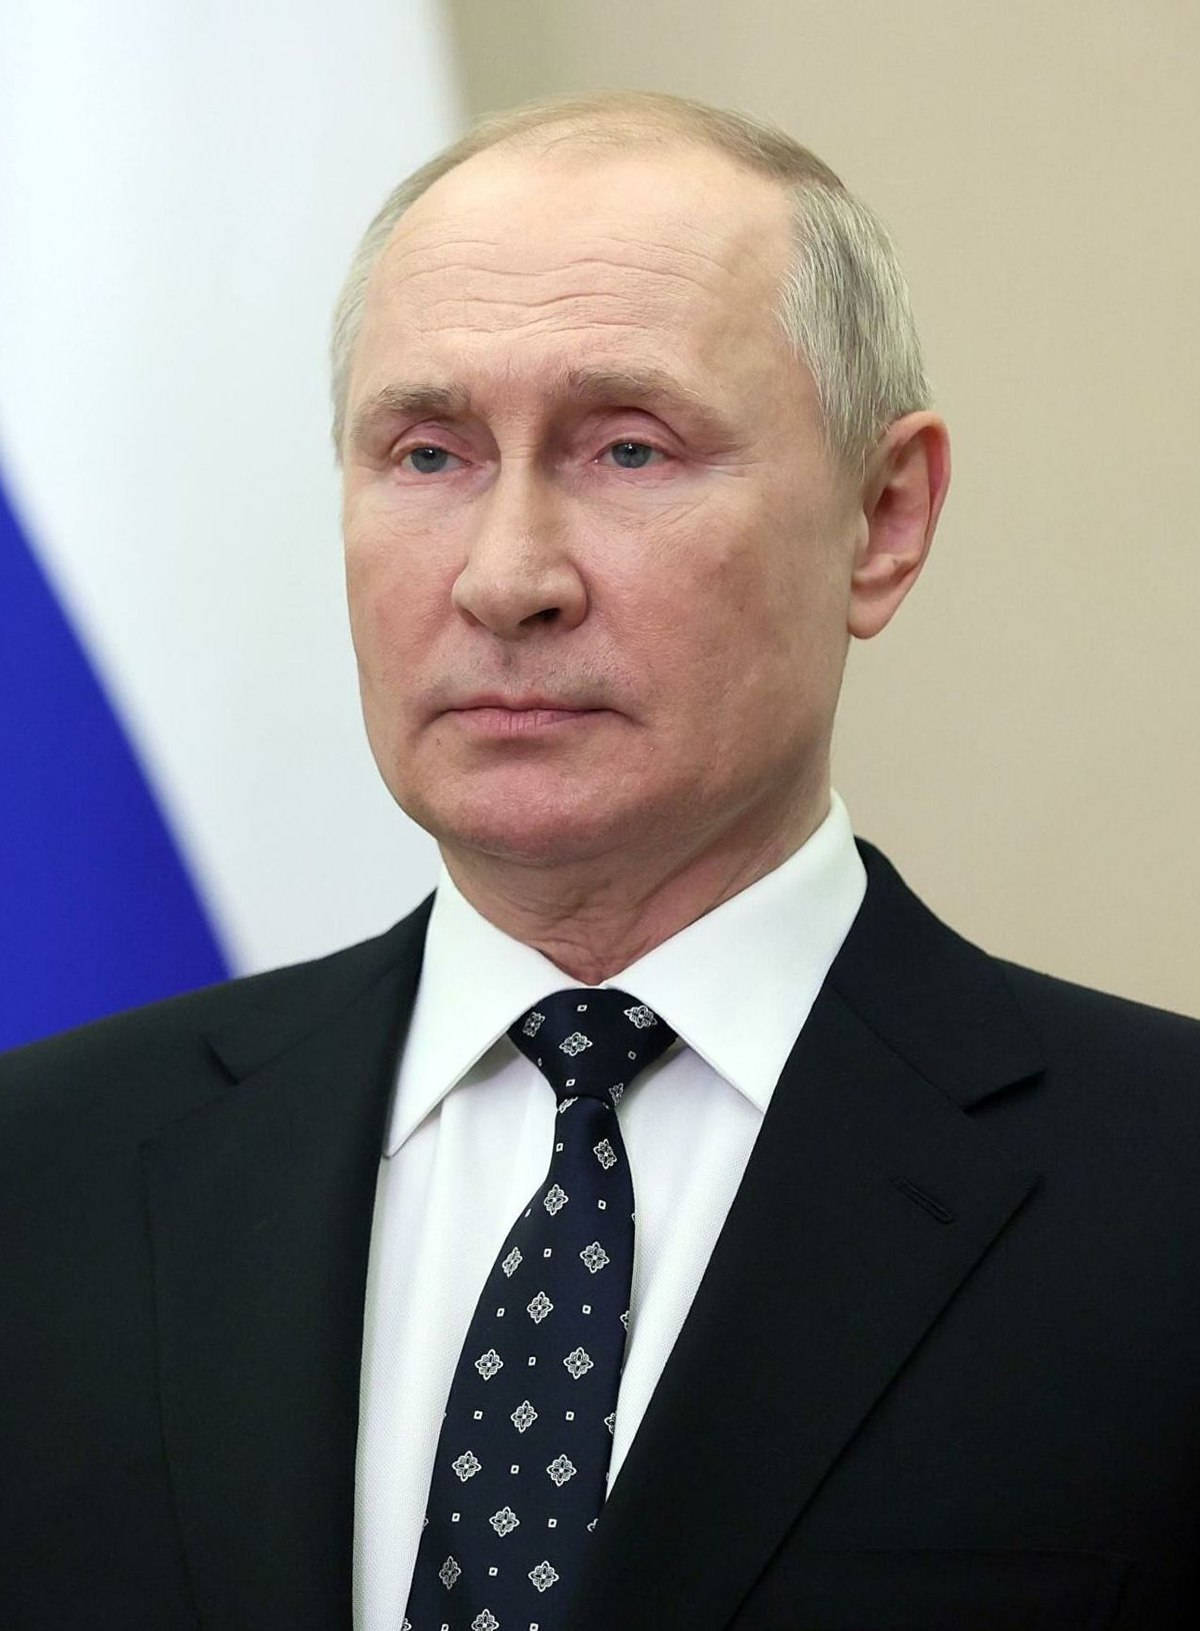 Portrait Photo Of Vladimir Putin Wallpaper